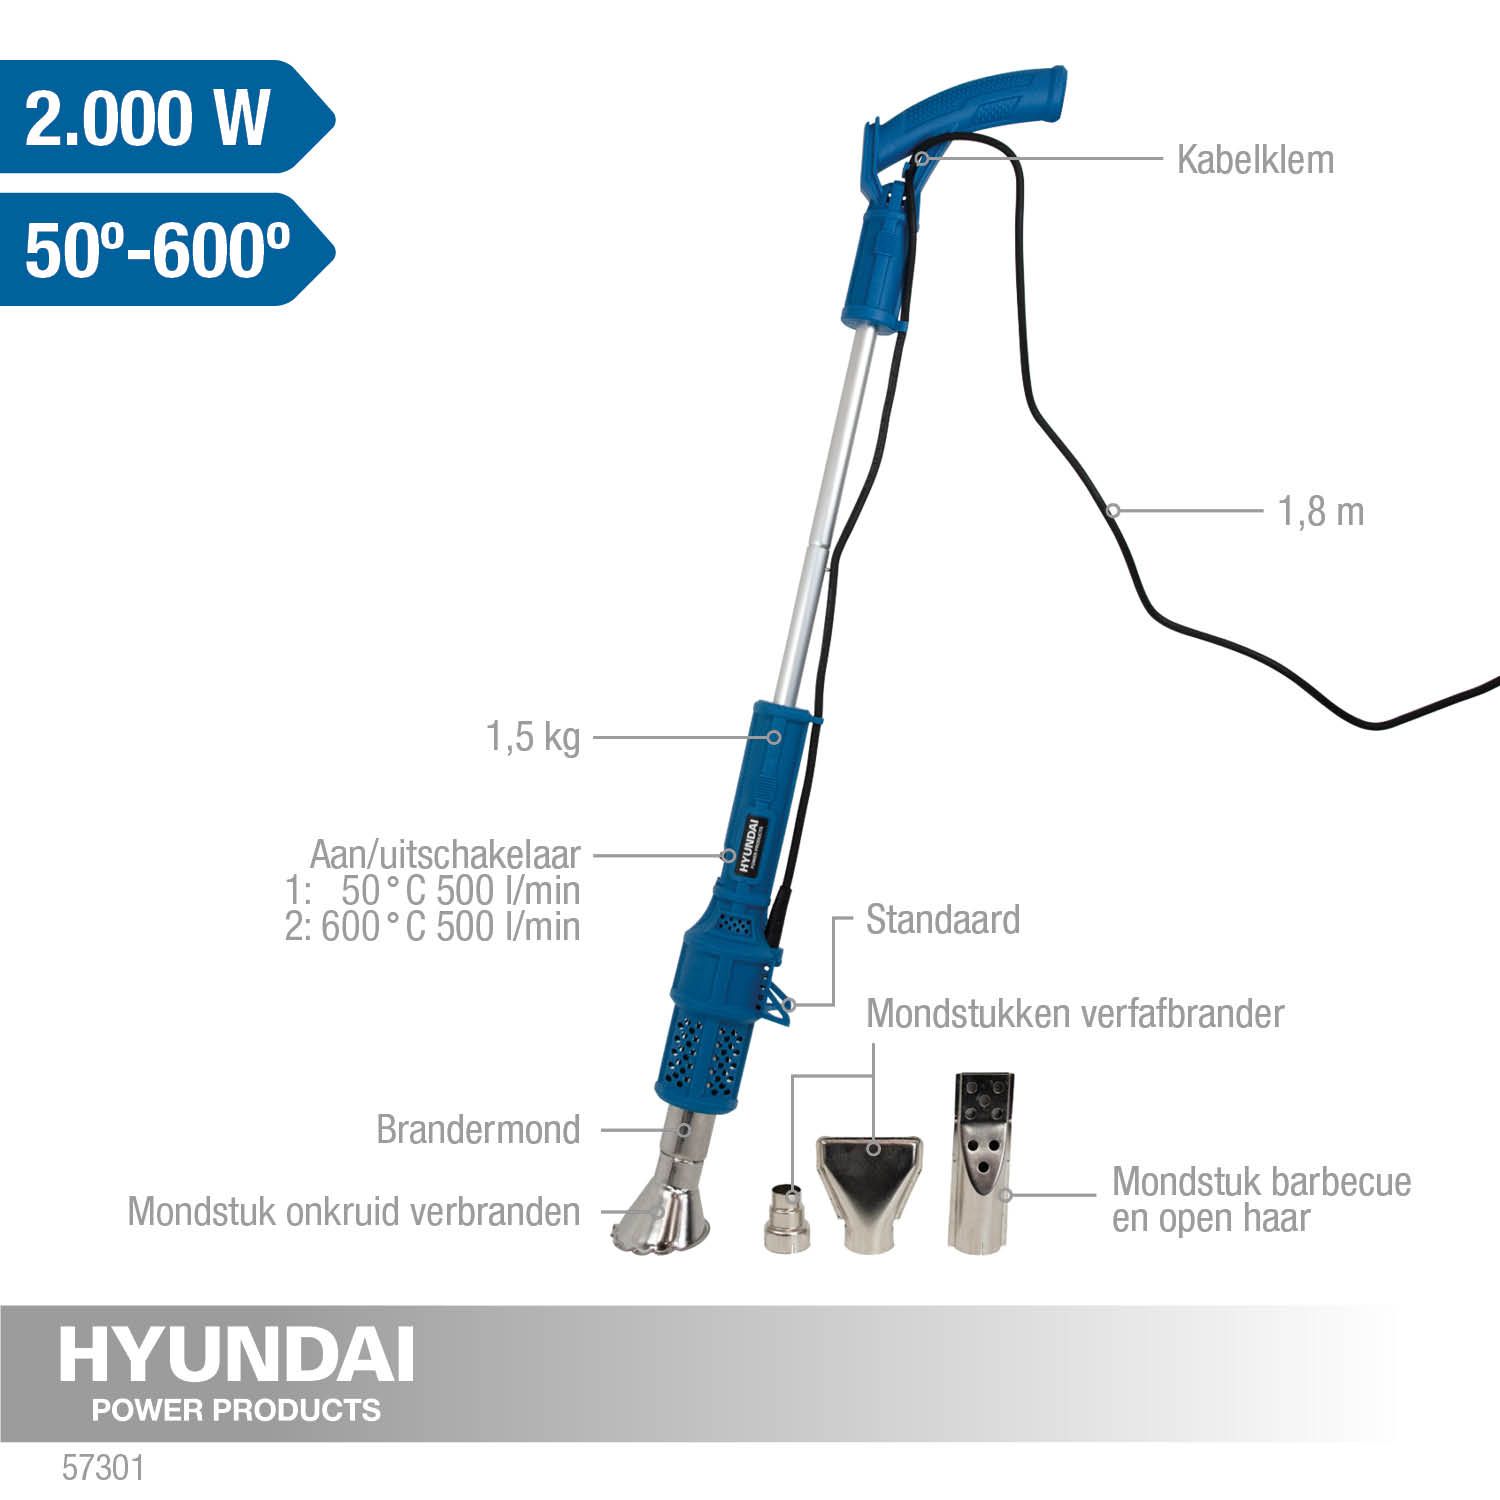 Hyundai onkruidbrander 2000W